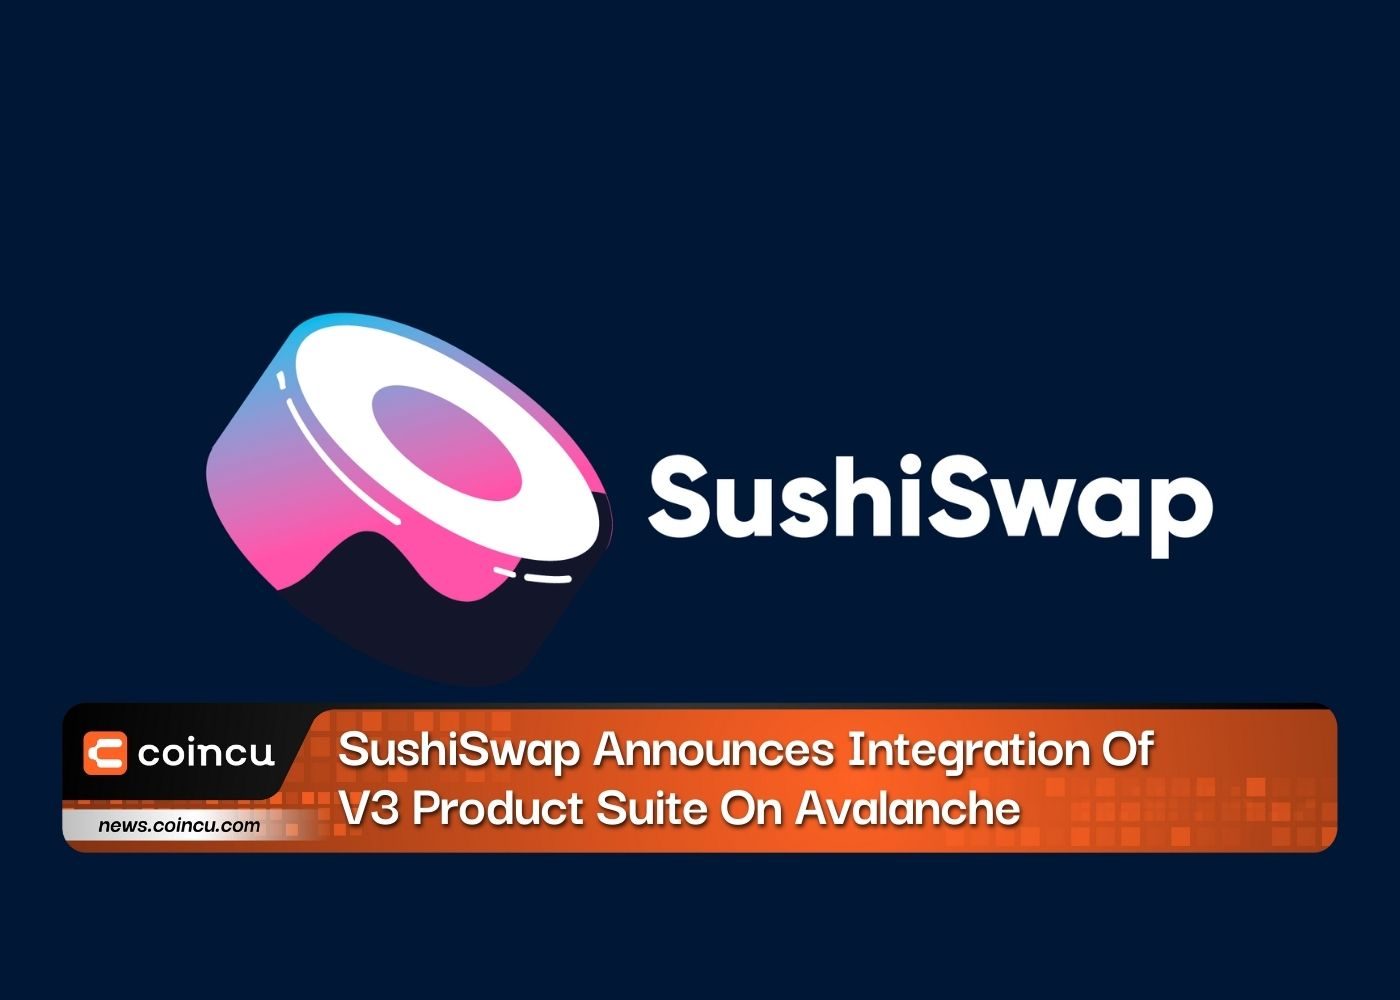 SushiSwap объявляет об интеграции набора продуктов V3 в Avalanche